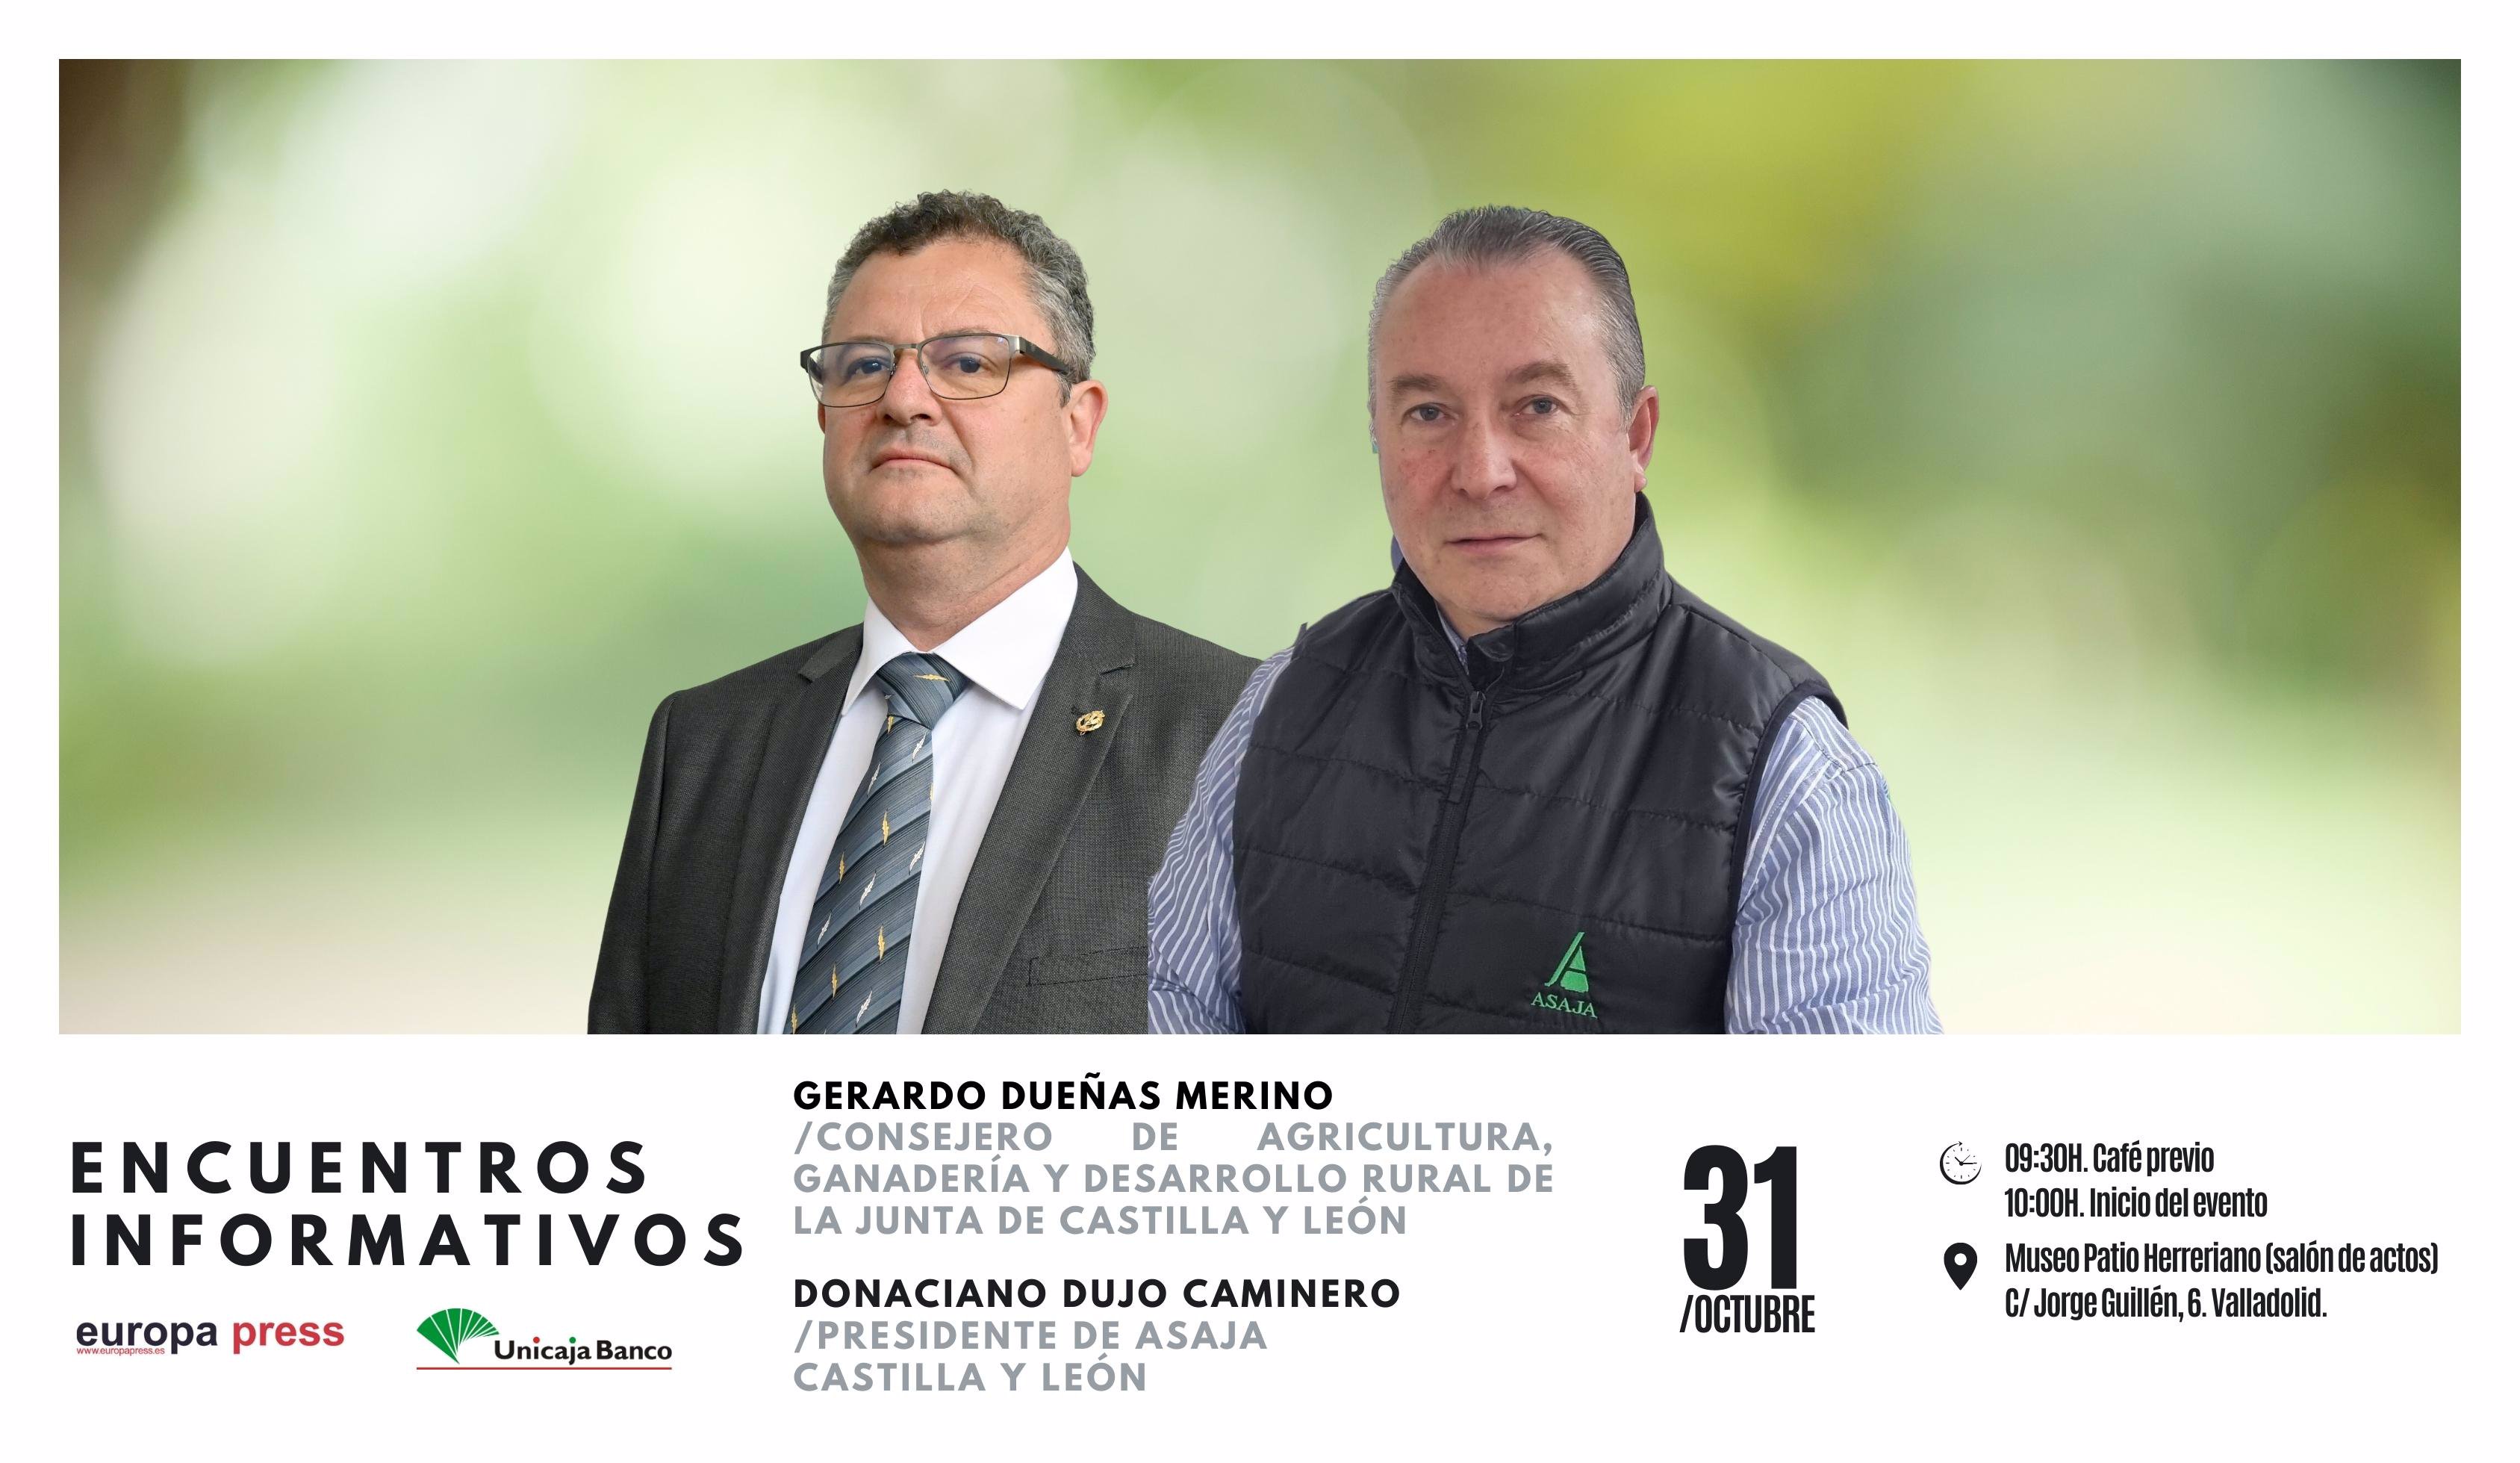 Cartel evento Gerardo Due&#241;as Merino / Donaciano Dujo